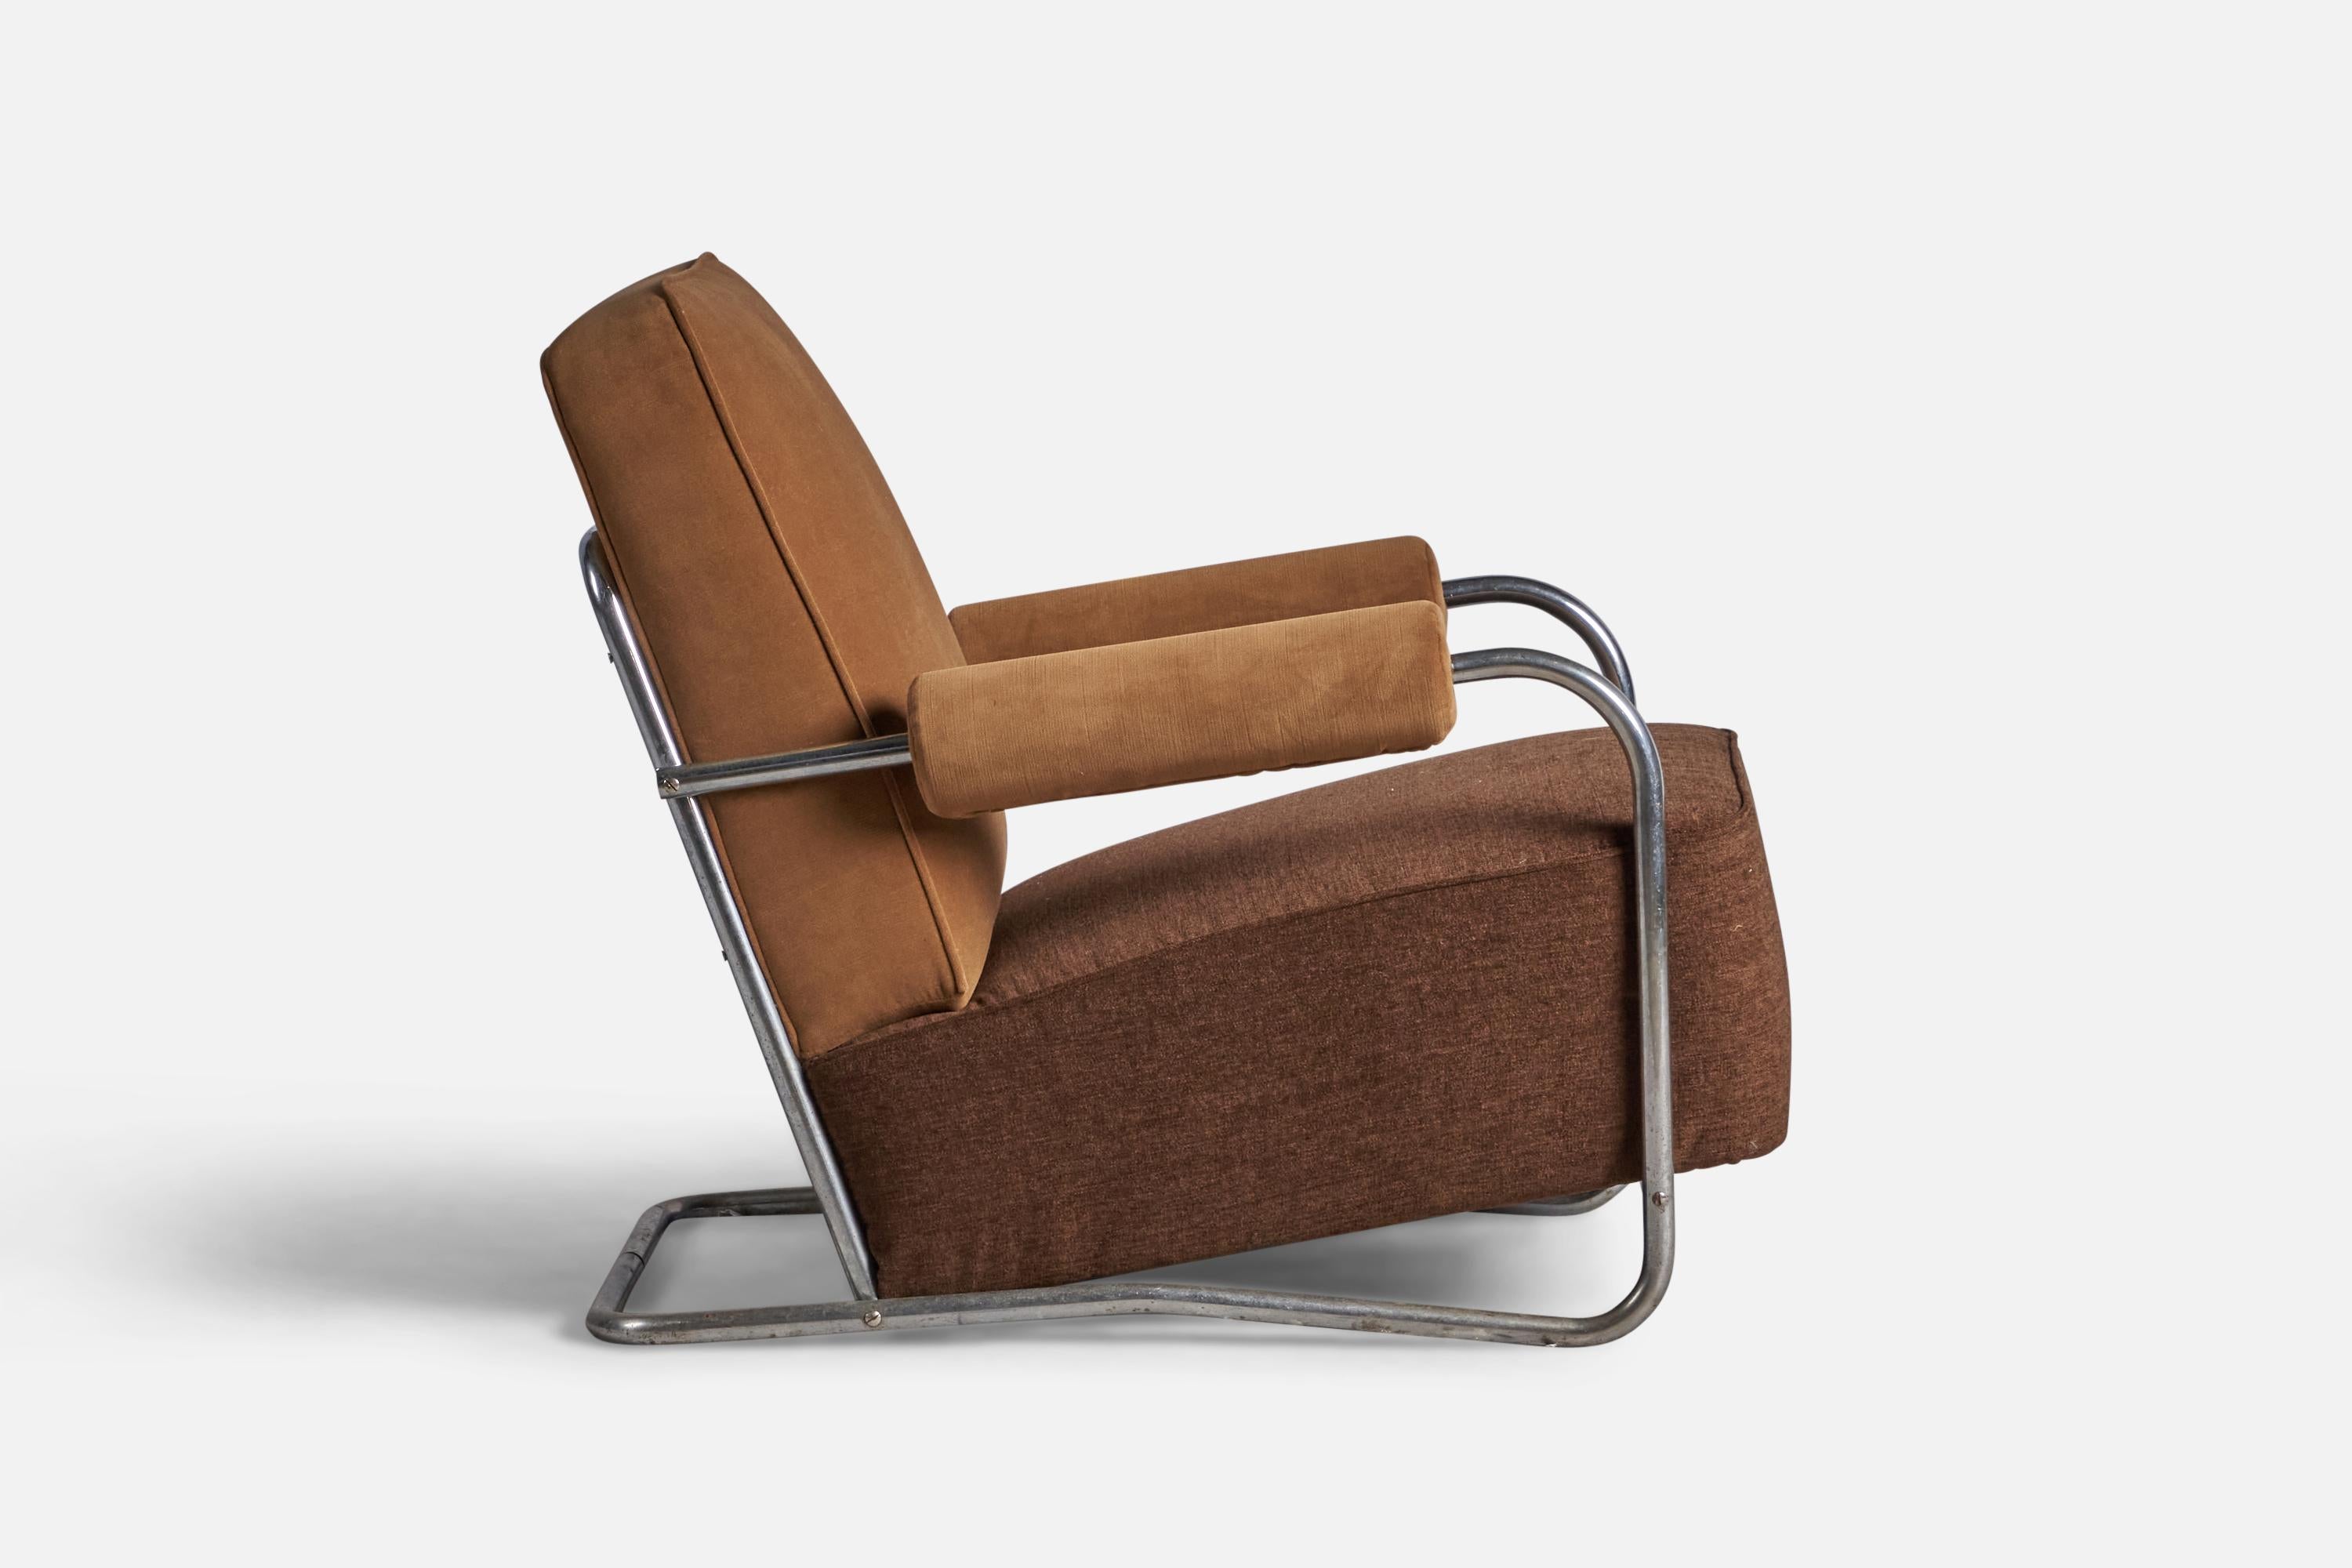 Machine Age American Designer, Lounge Chairs, Tubular Steel, Fabric, USA, 1930s For Sale